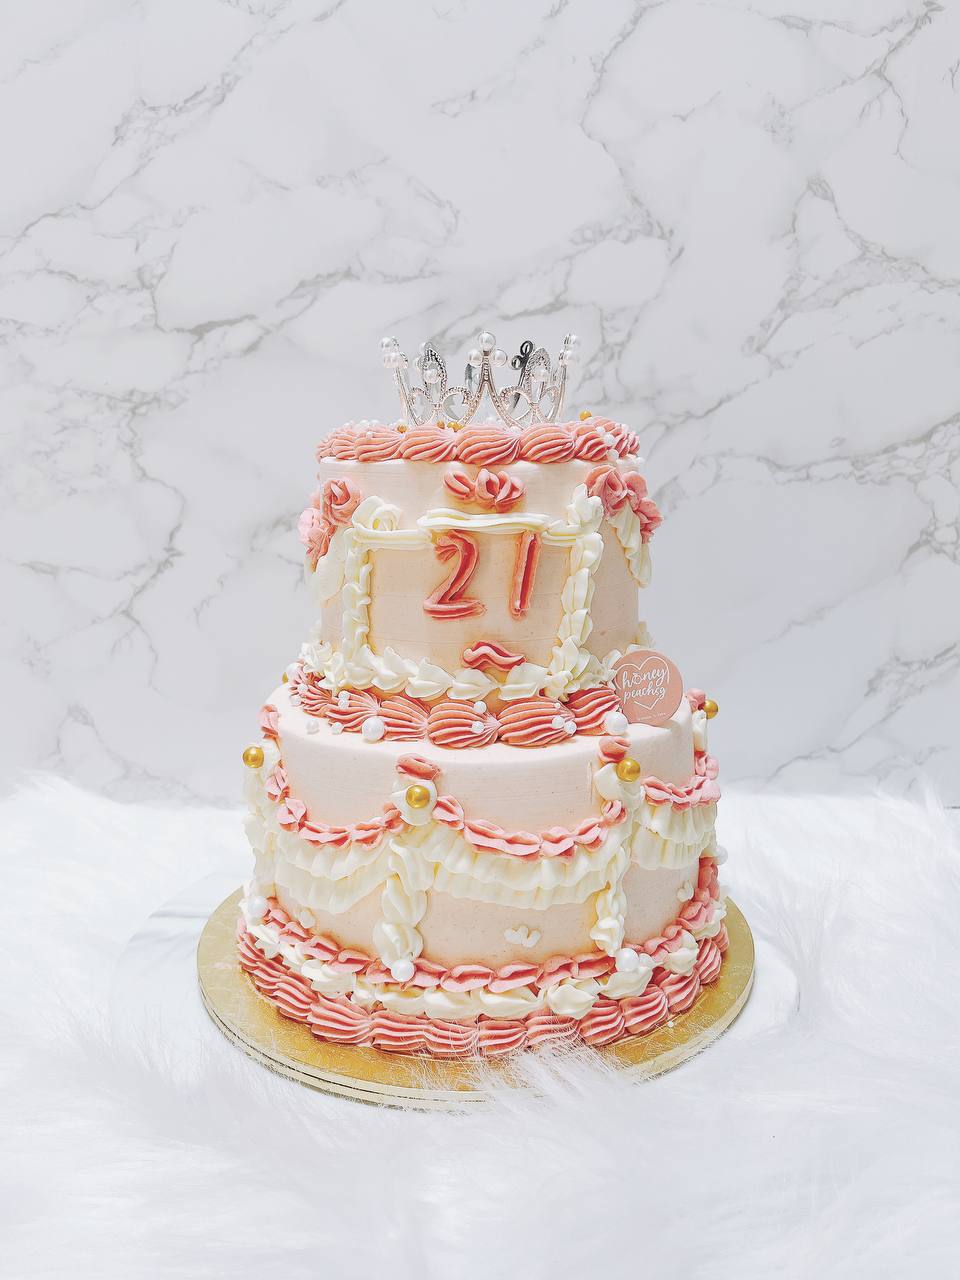 crown royal vanilla cake